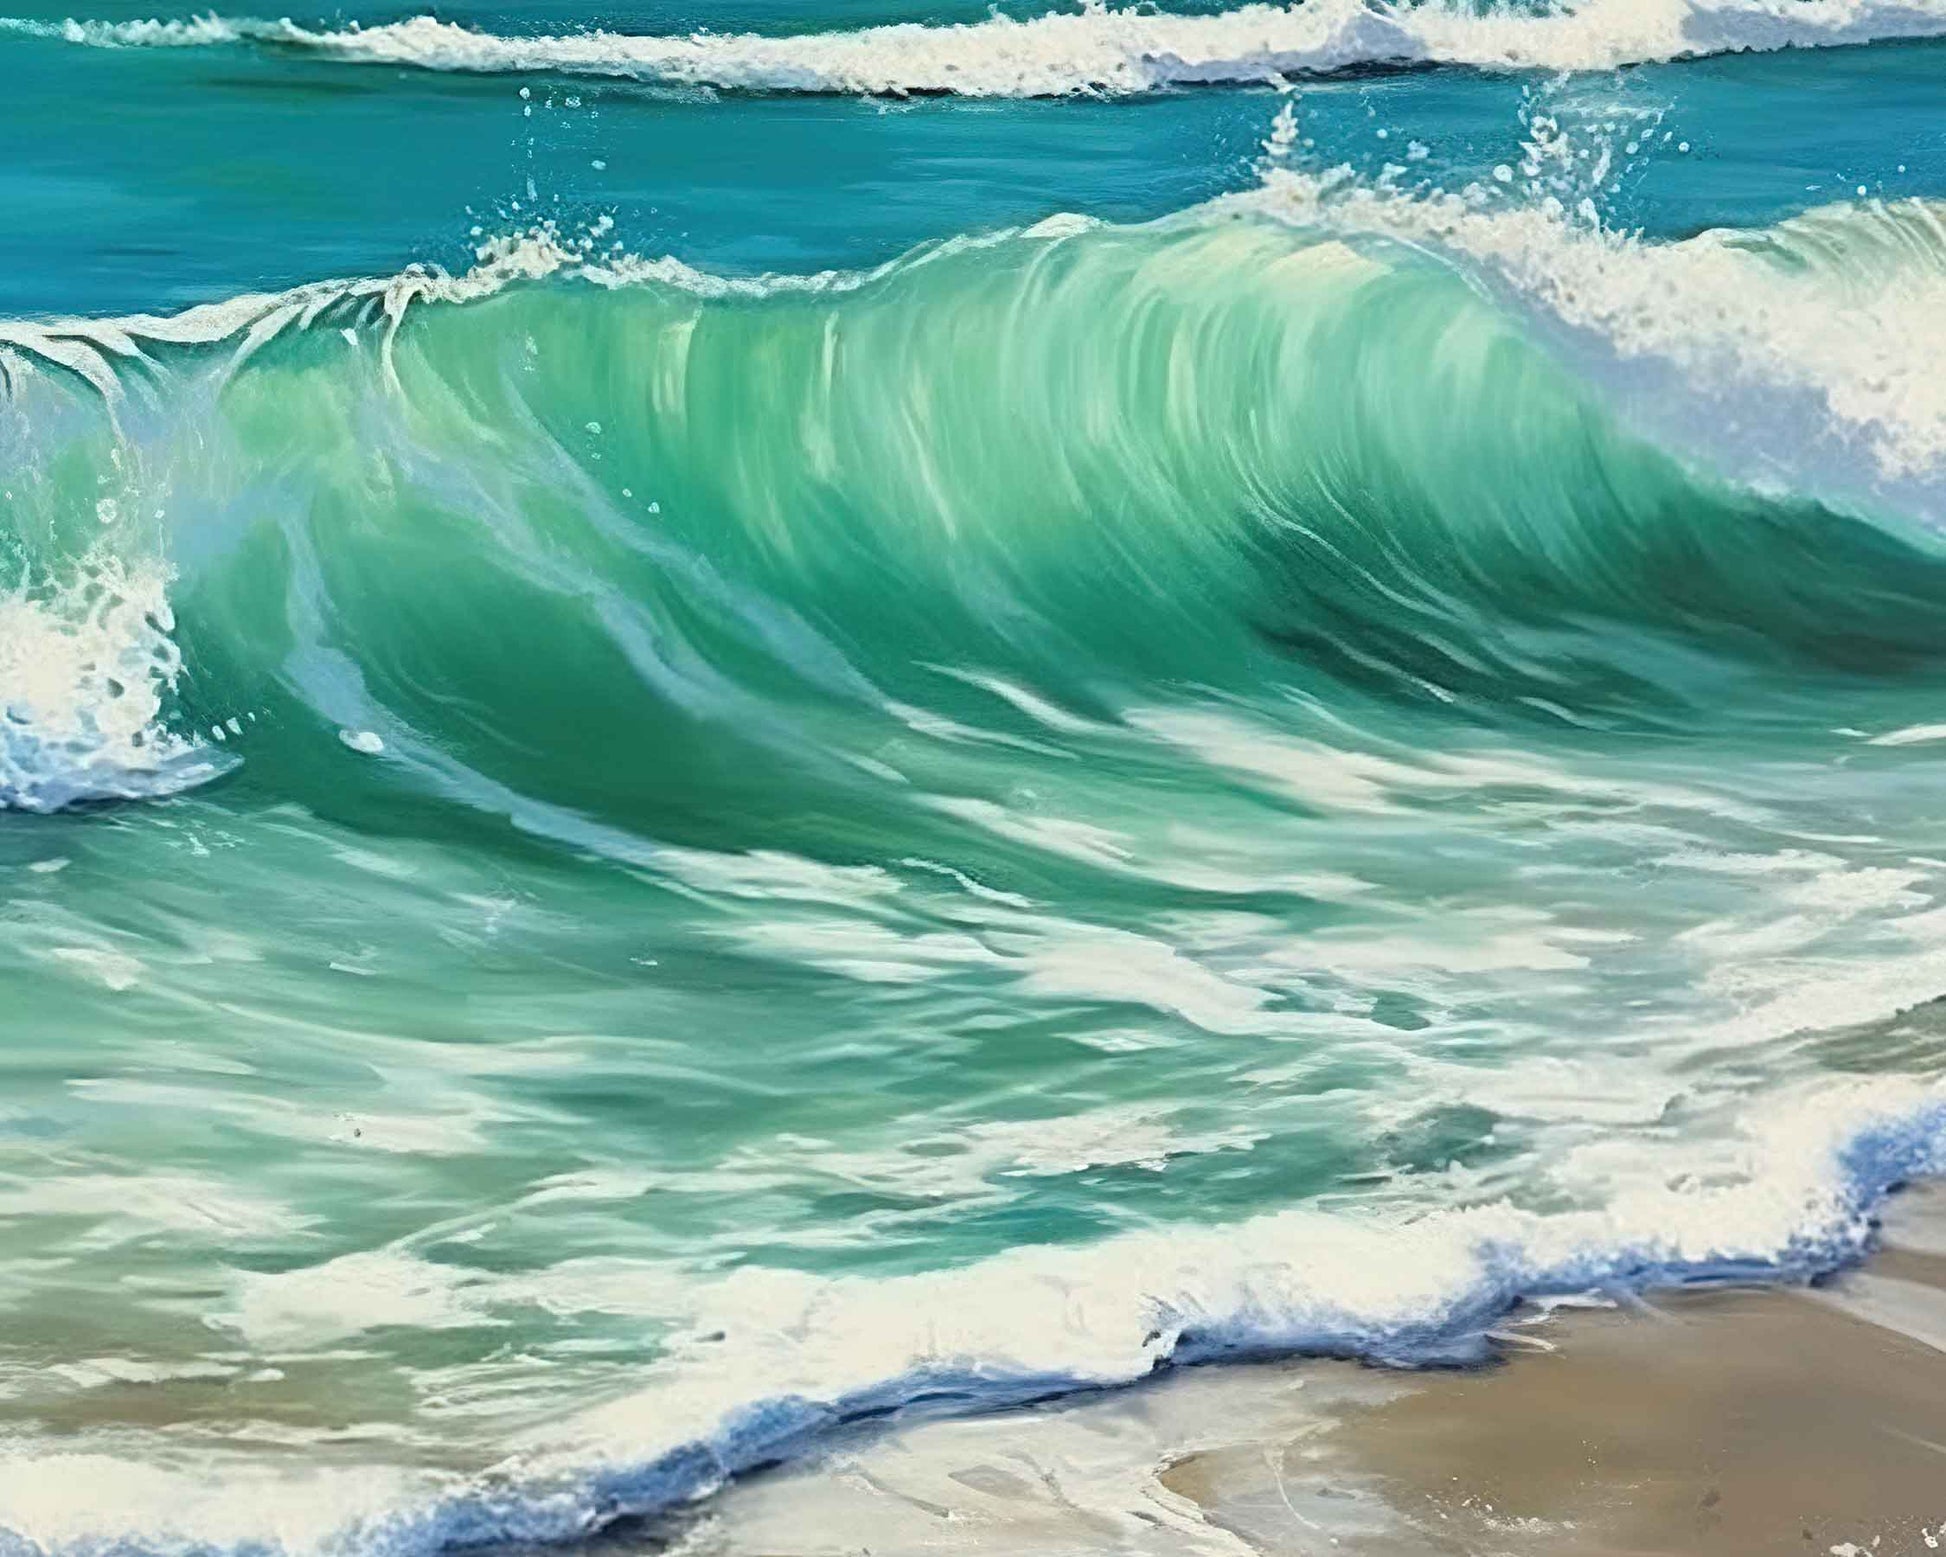 Framed Image of Boho Surf Beach and Nature Ocean Coastal Abstract Wall Art Prints